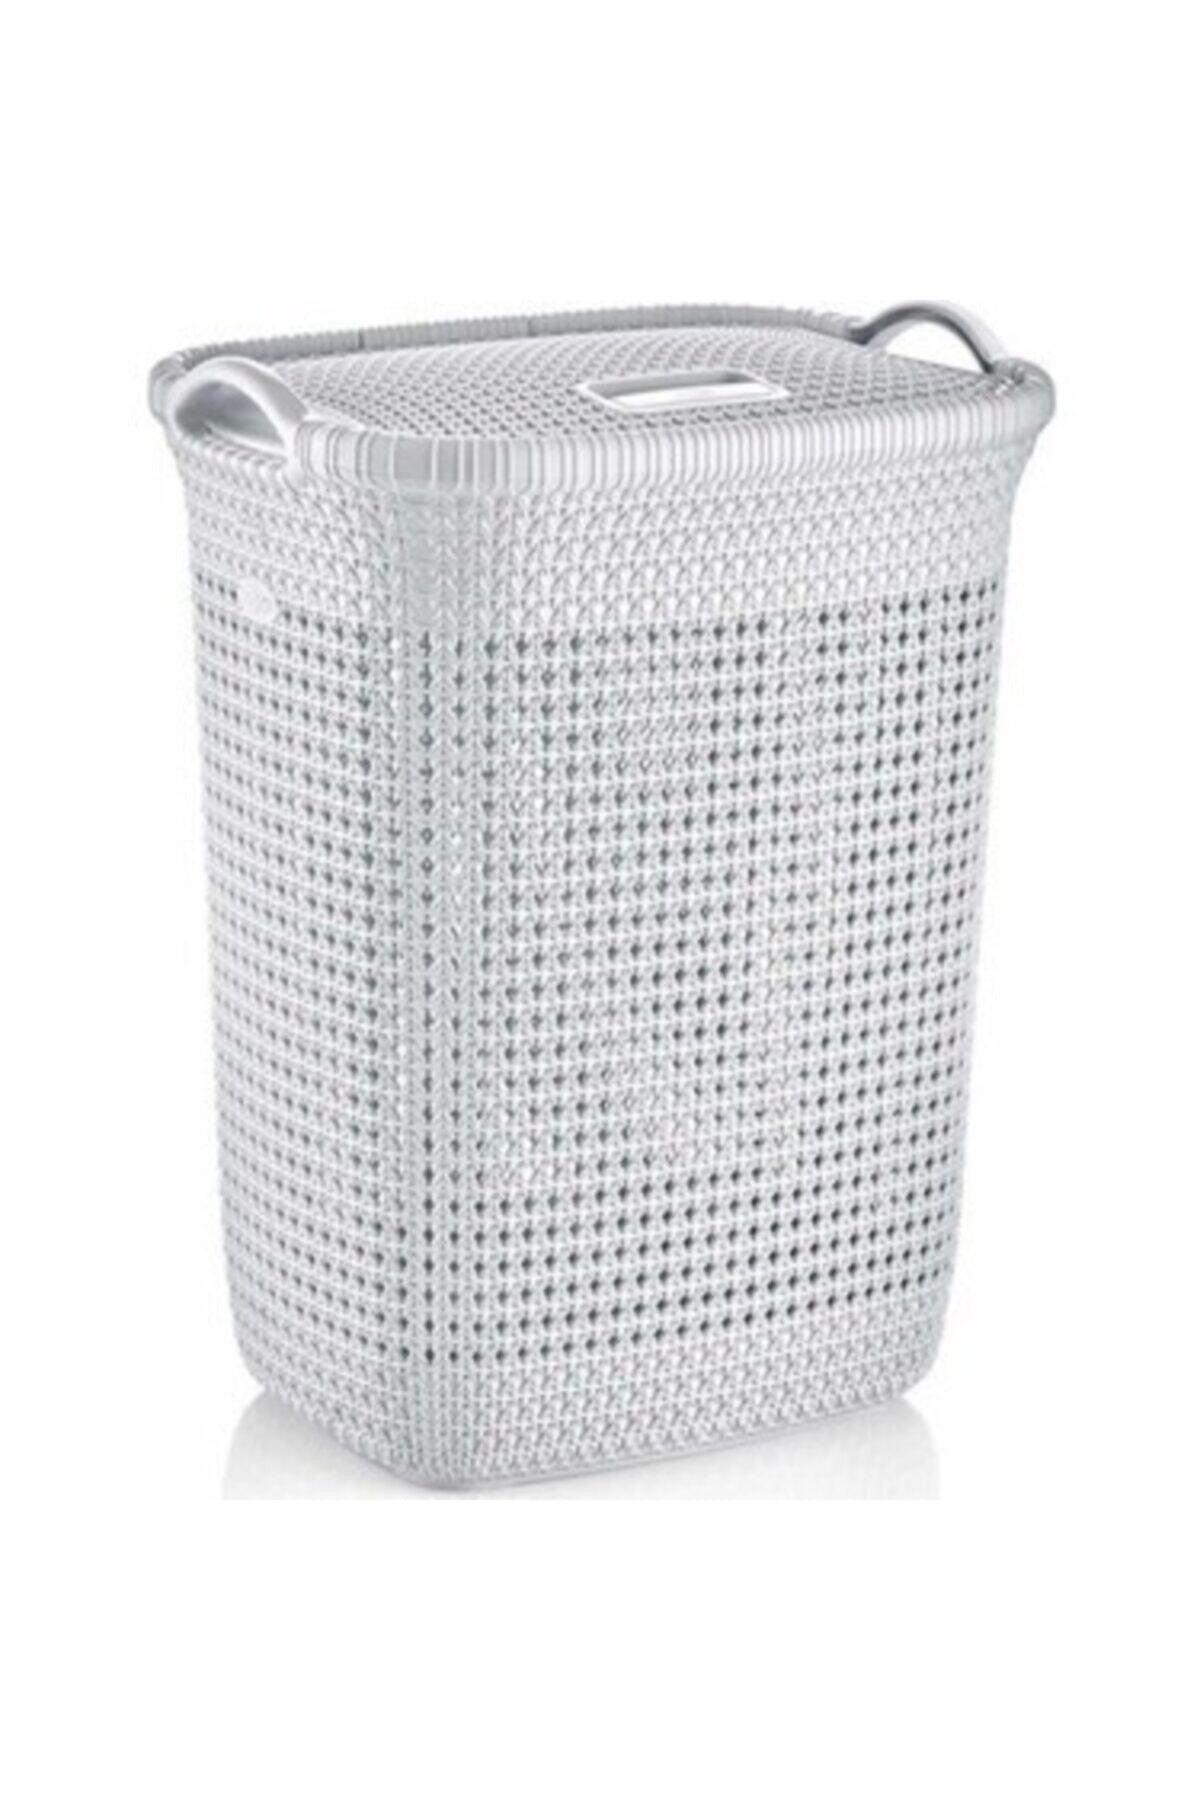 White Weave Patterned 52 Liter Dirty Laundry Basket - Swordslife